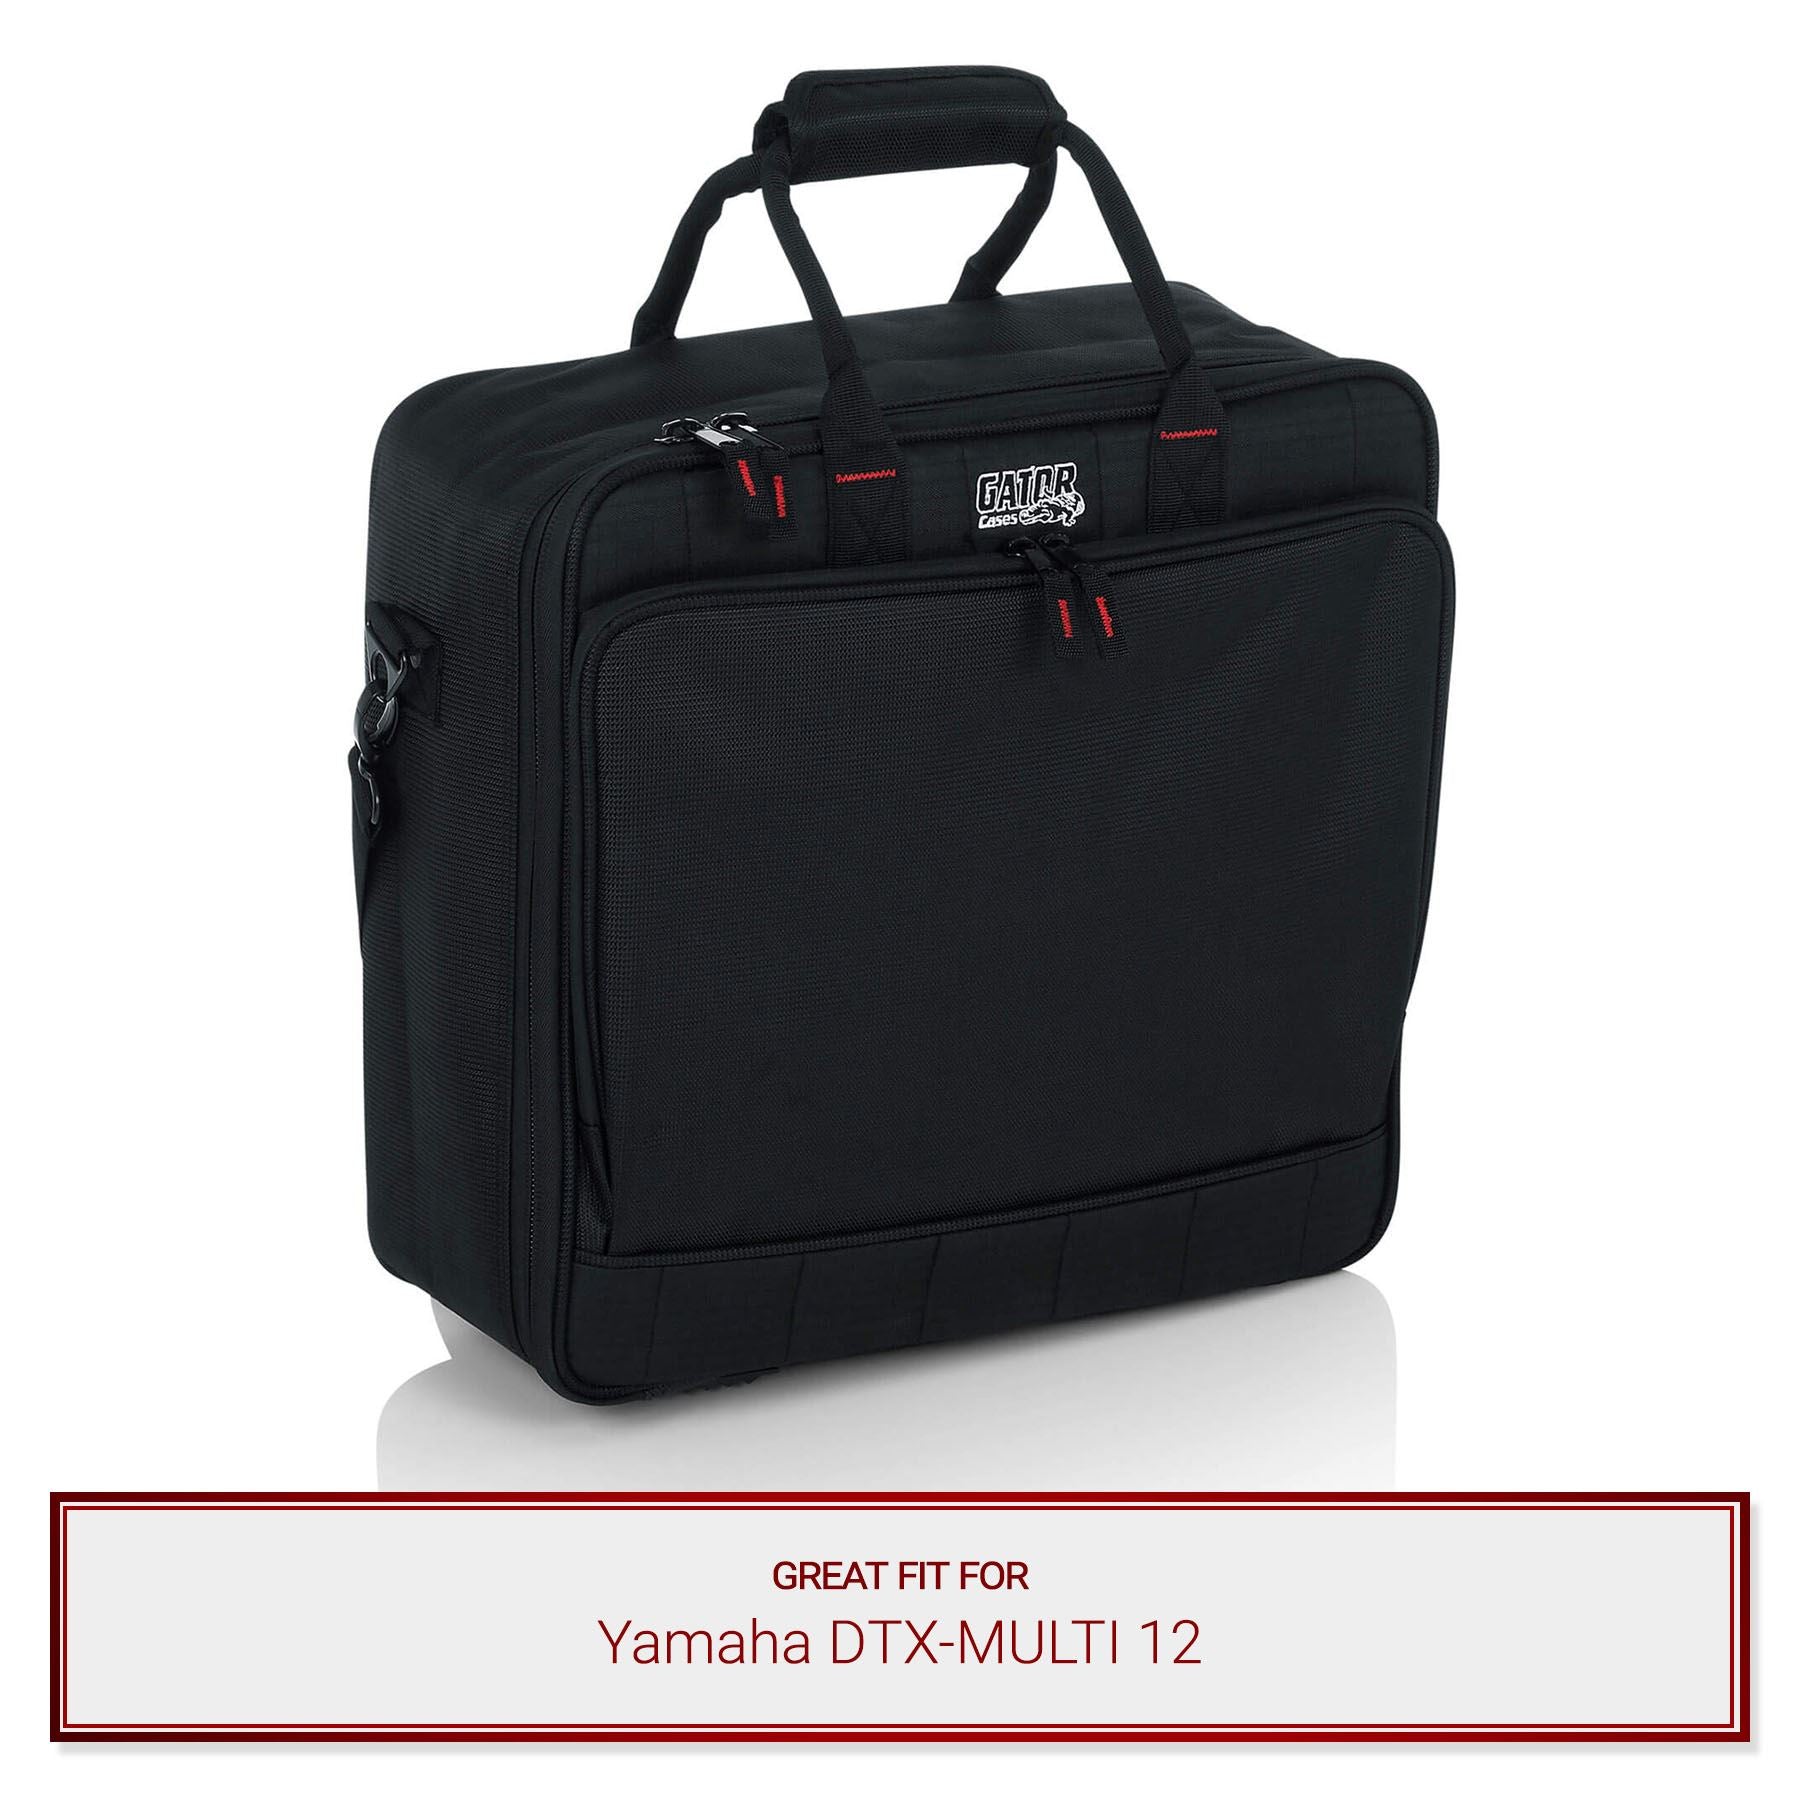 Gator Cases Padded Equipment Bag fits Yamaha DTX-MULTI 12 Drum